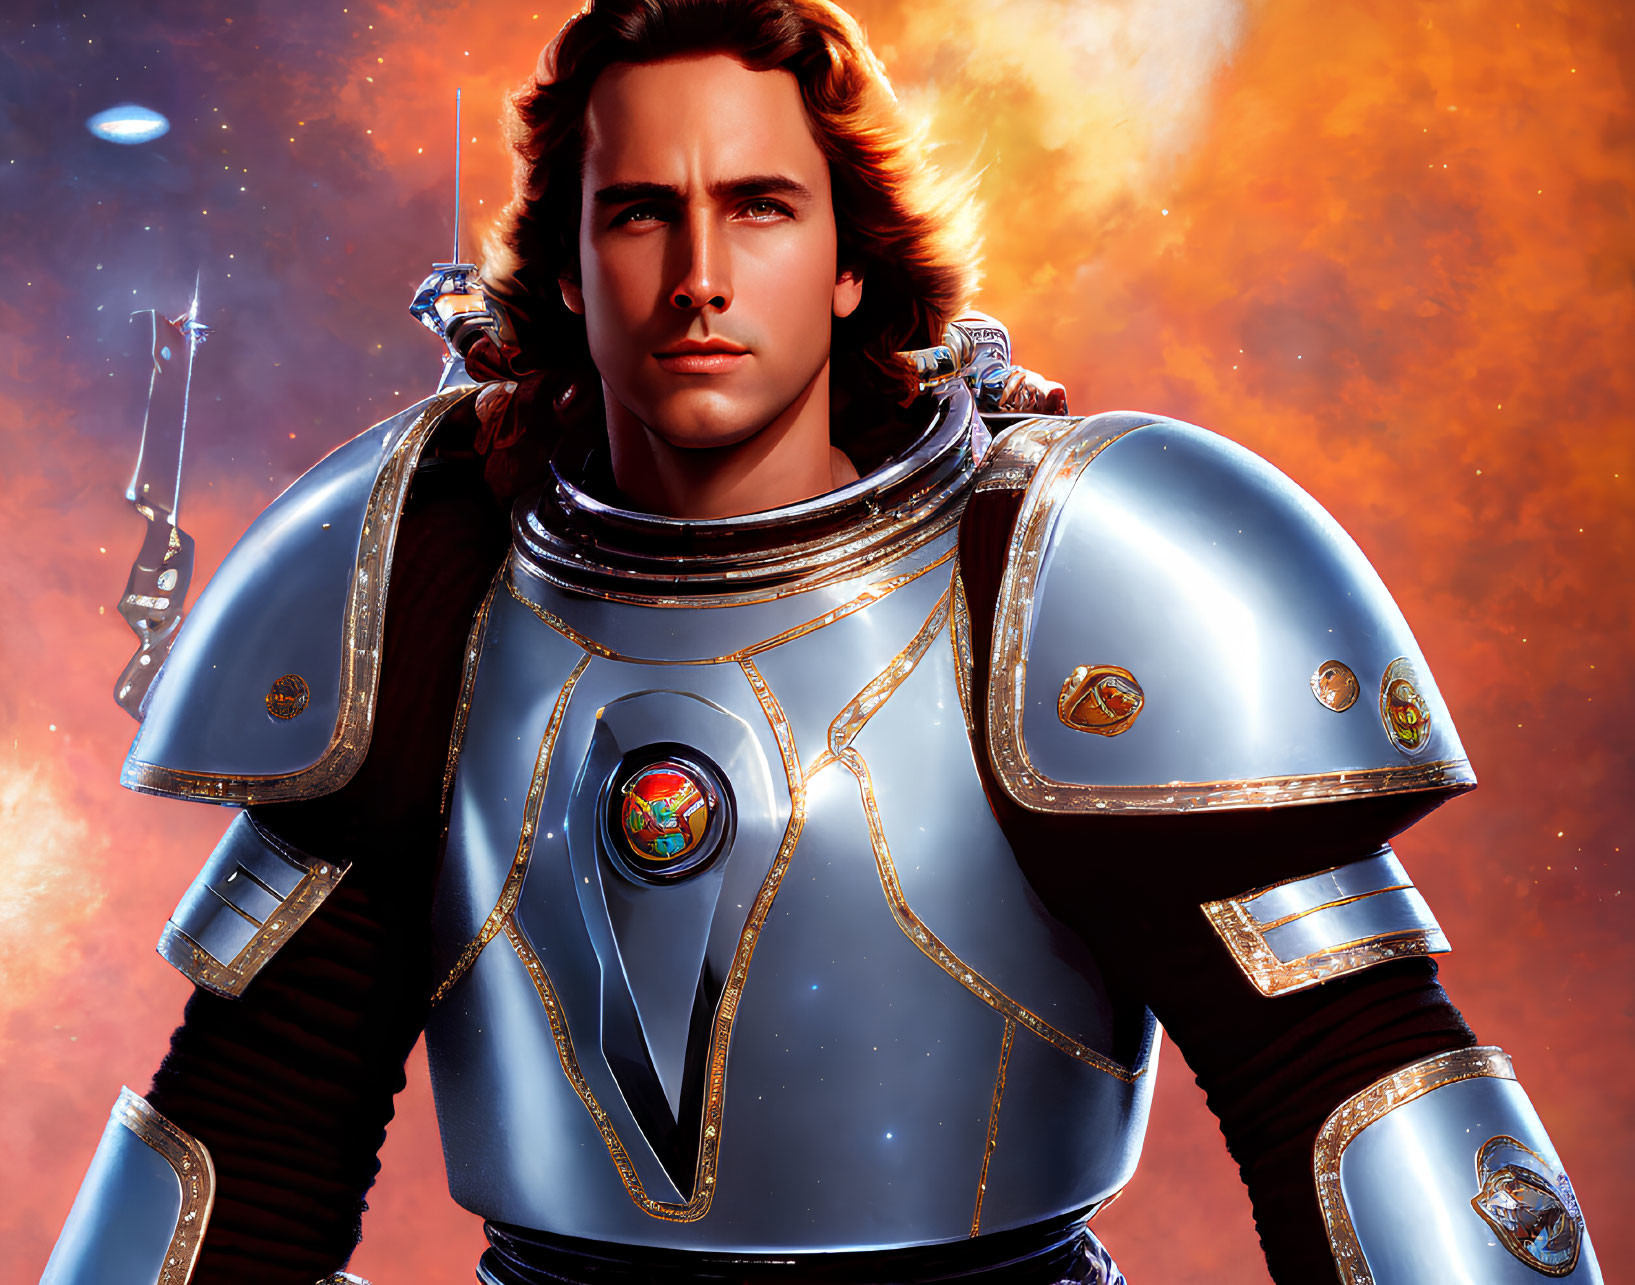 Man in futuristic armor with long hair in fiery cosmic setting